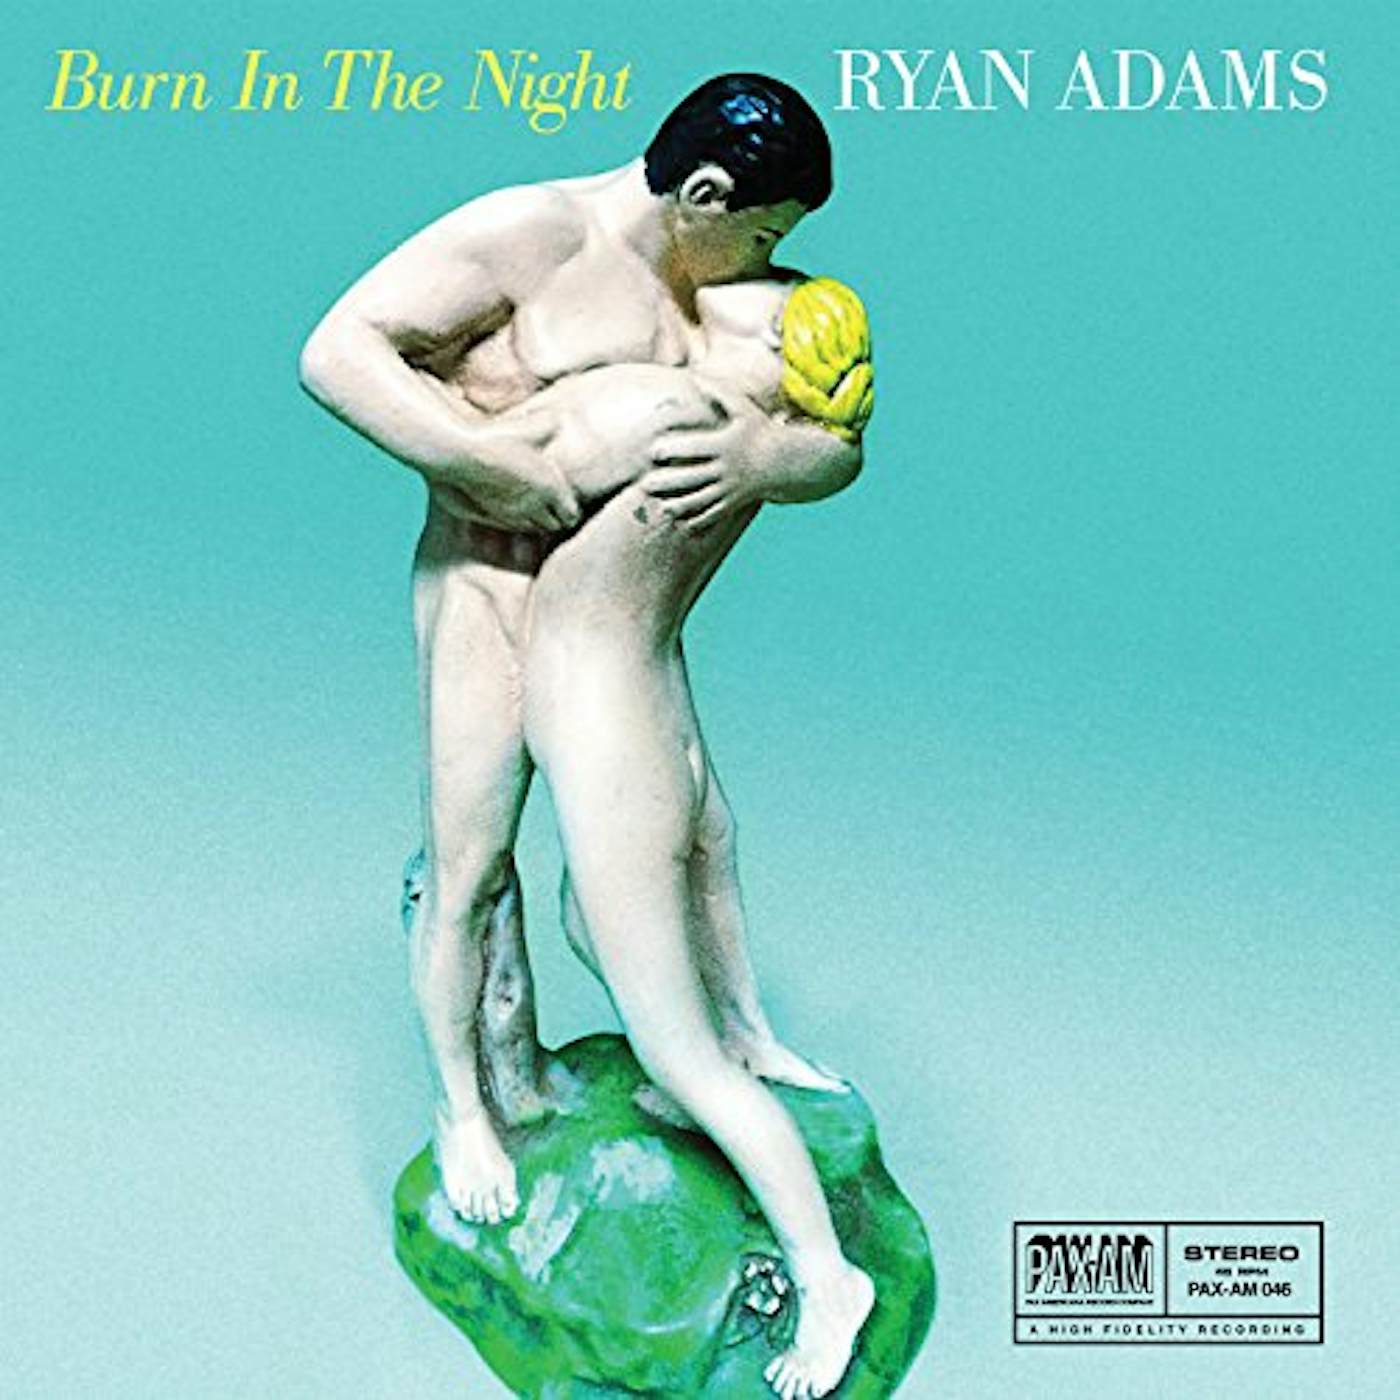 Ryan Adams Burn In The Night Vinyl Record